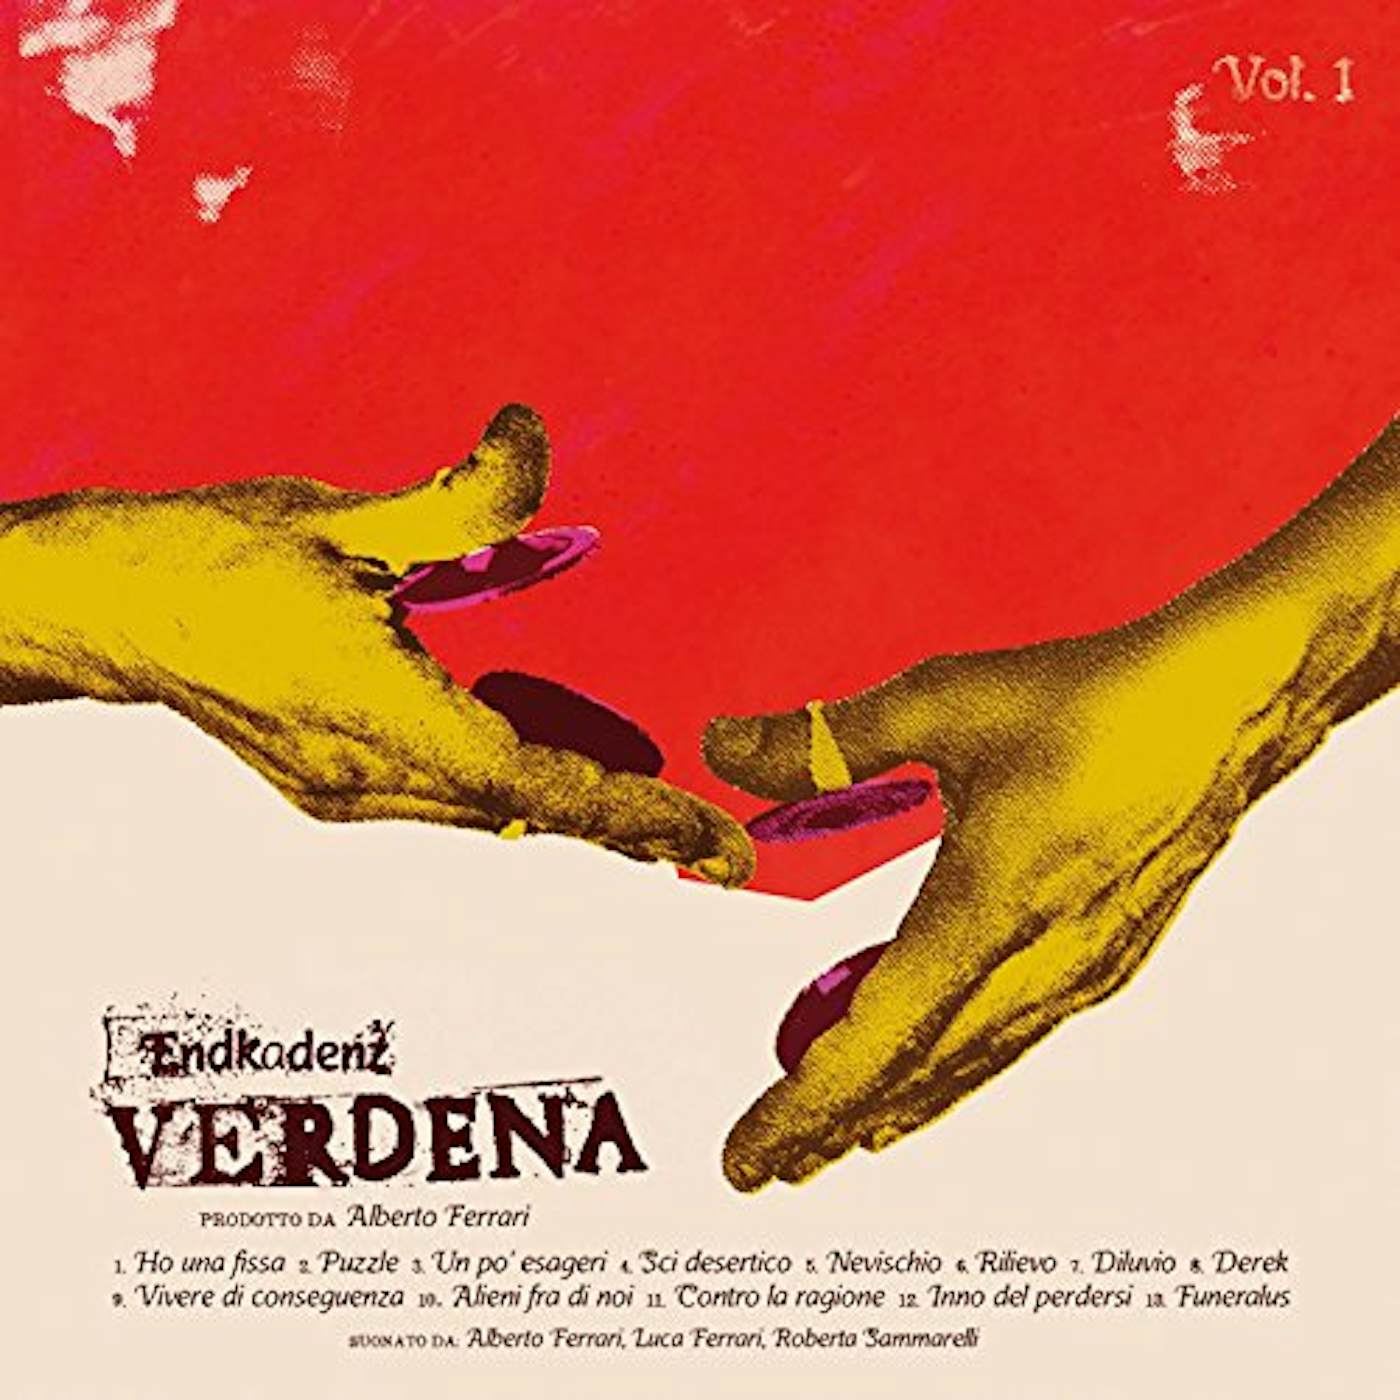 Verdena ENDKADENZ VOL. 1 Vinyl Record - Italy Release